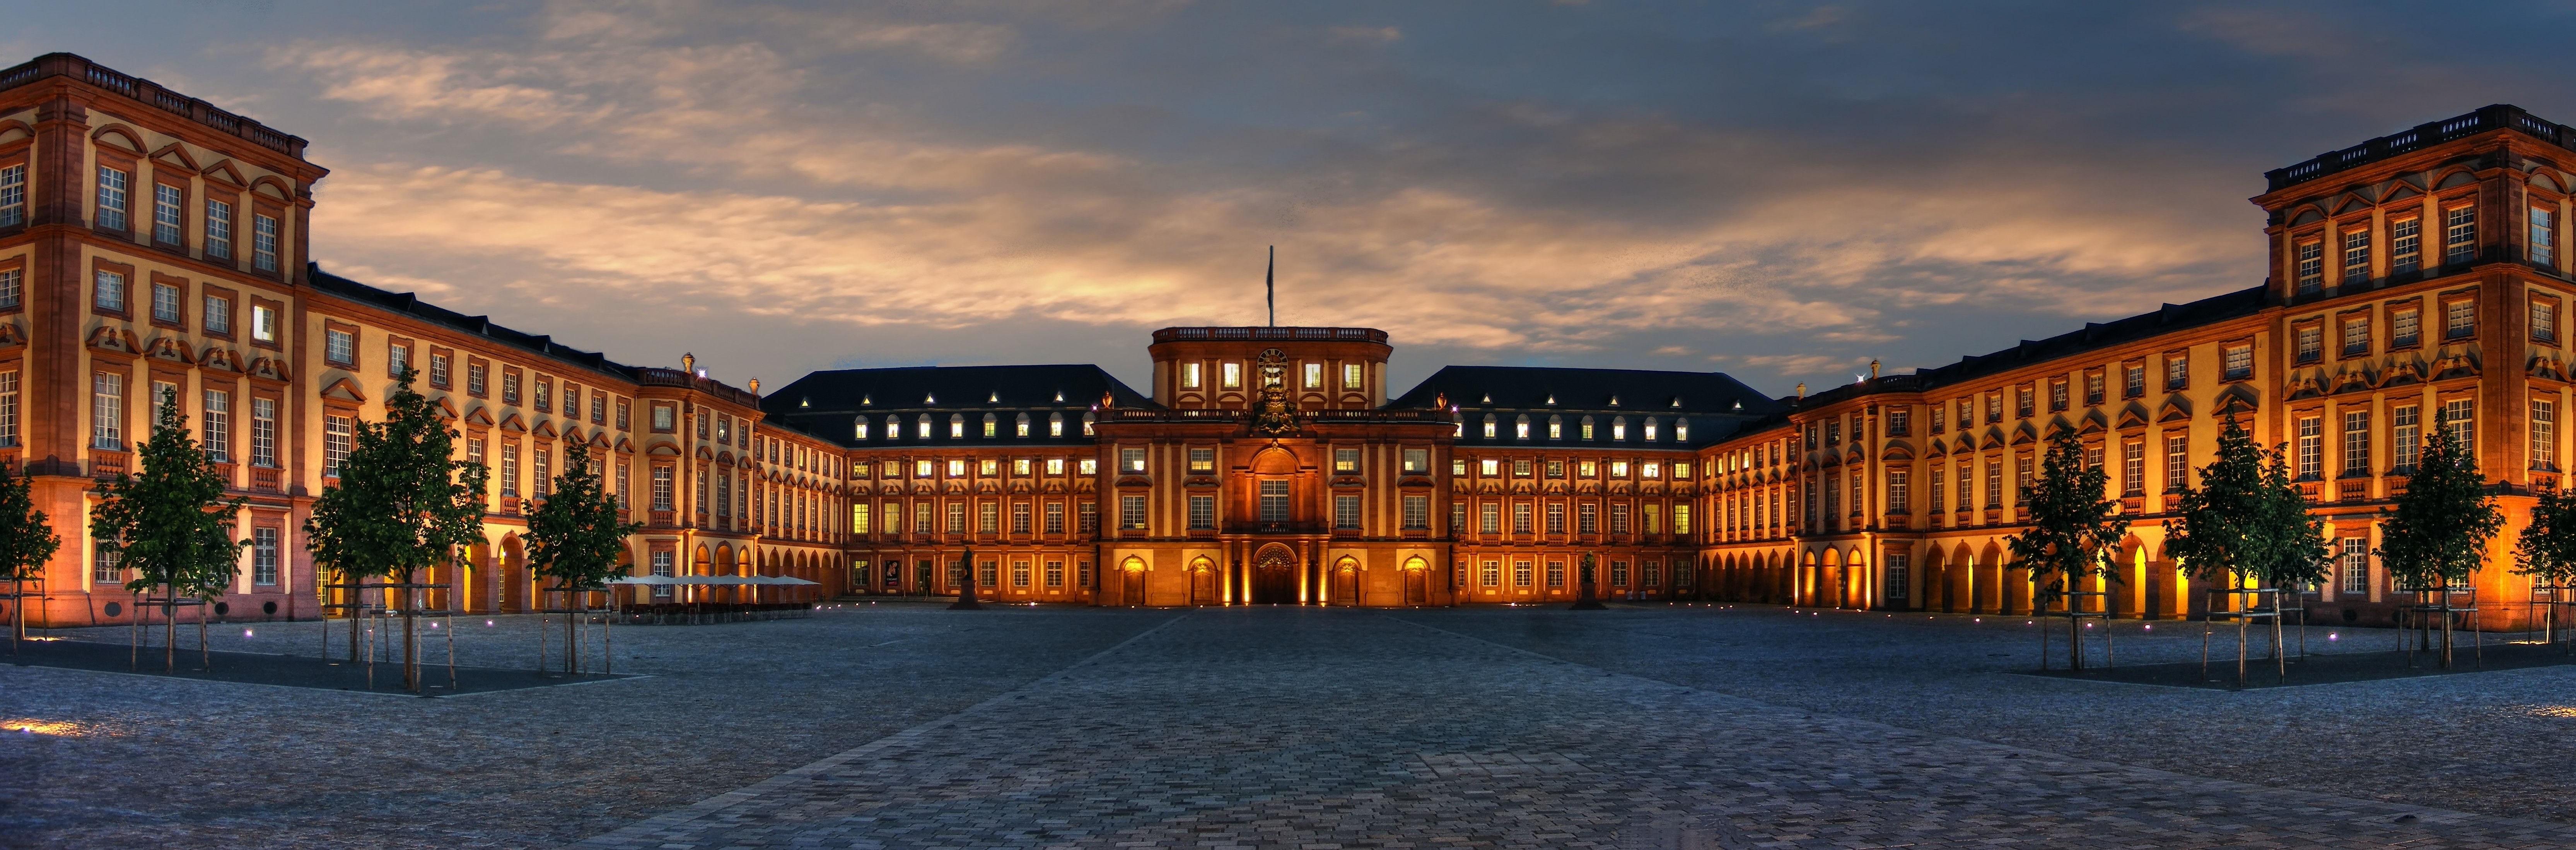 Mannheim Palace #8